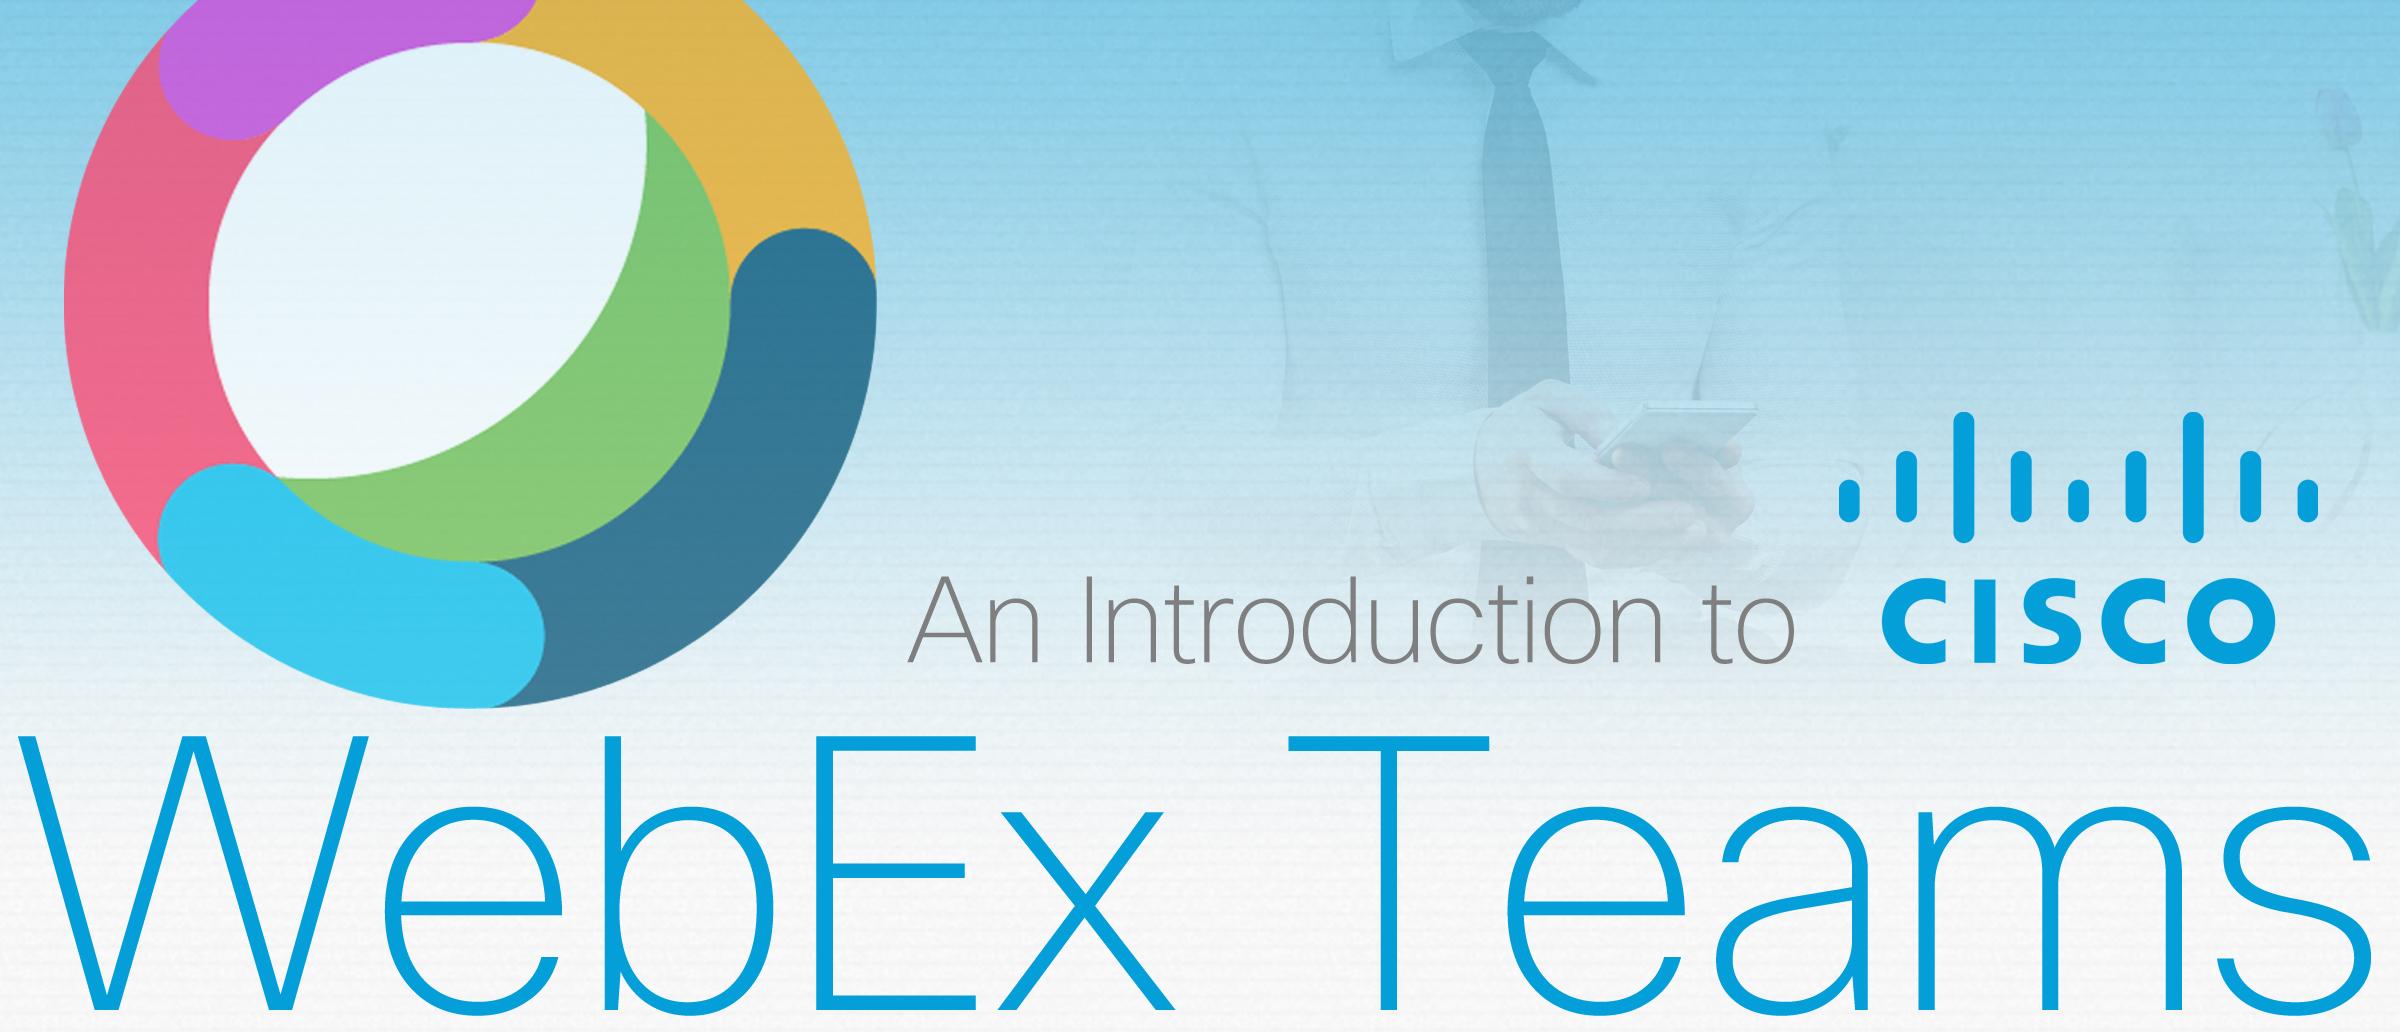 WebEx Team's Logo - Webex Teams - An Introduction to Webex Teams - Tesrex